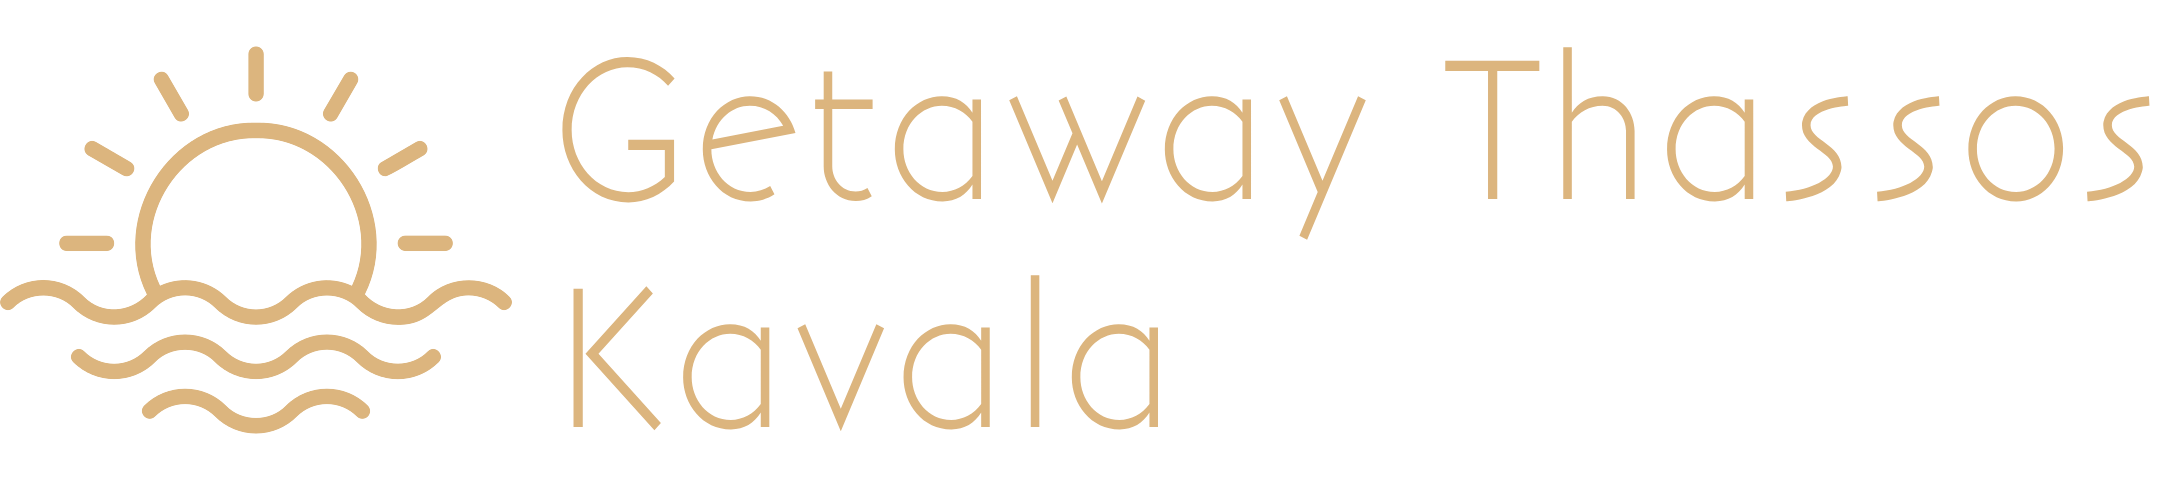 Getaway Thassos Kavala | Weddings - Getaway Thassos Kavala